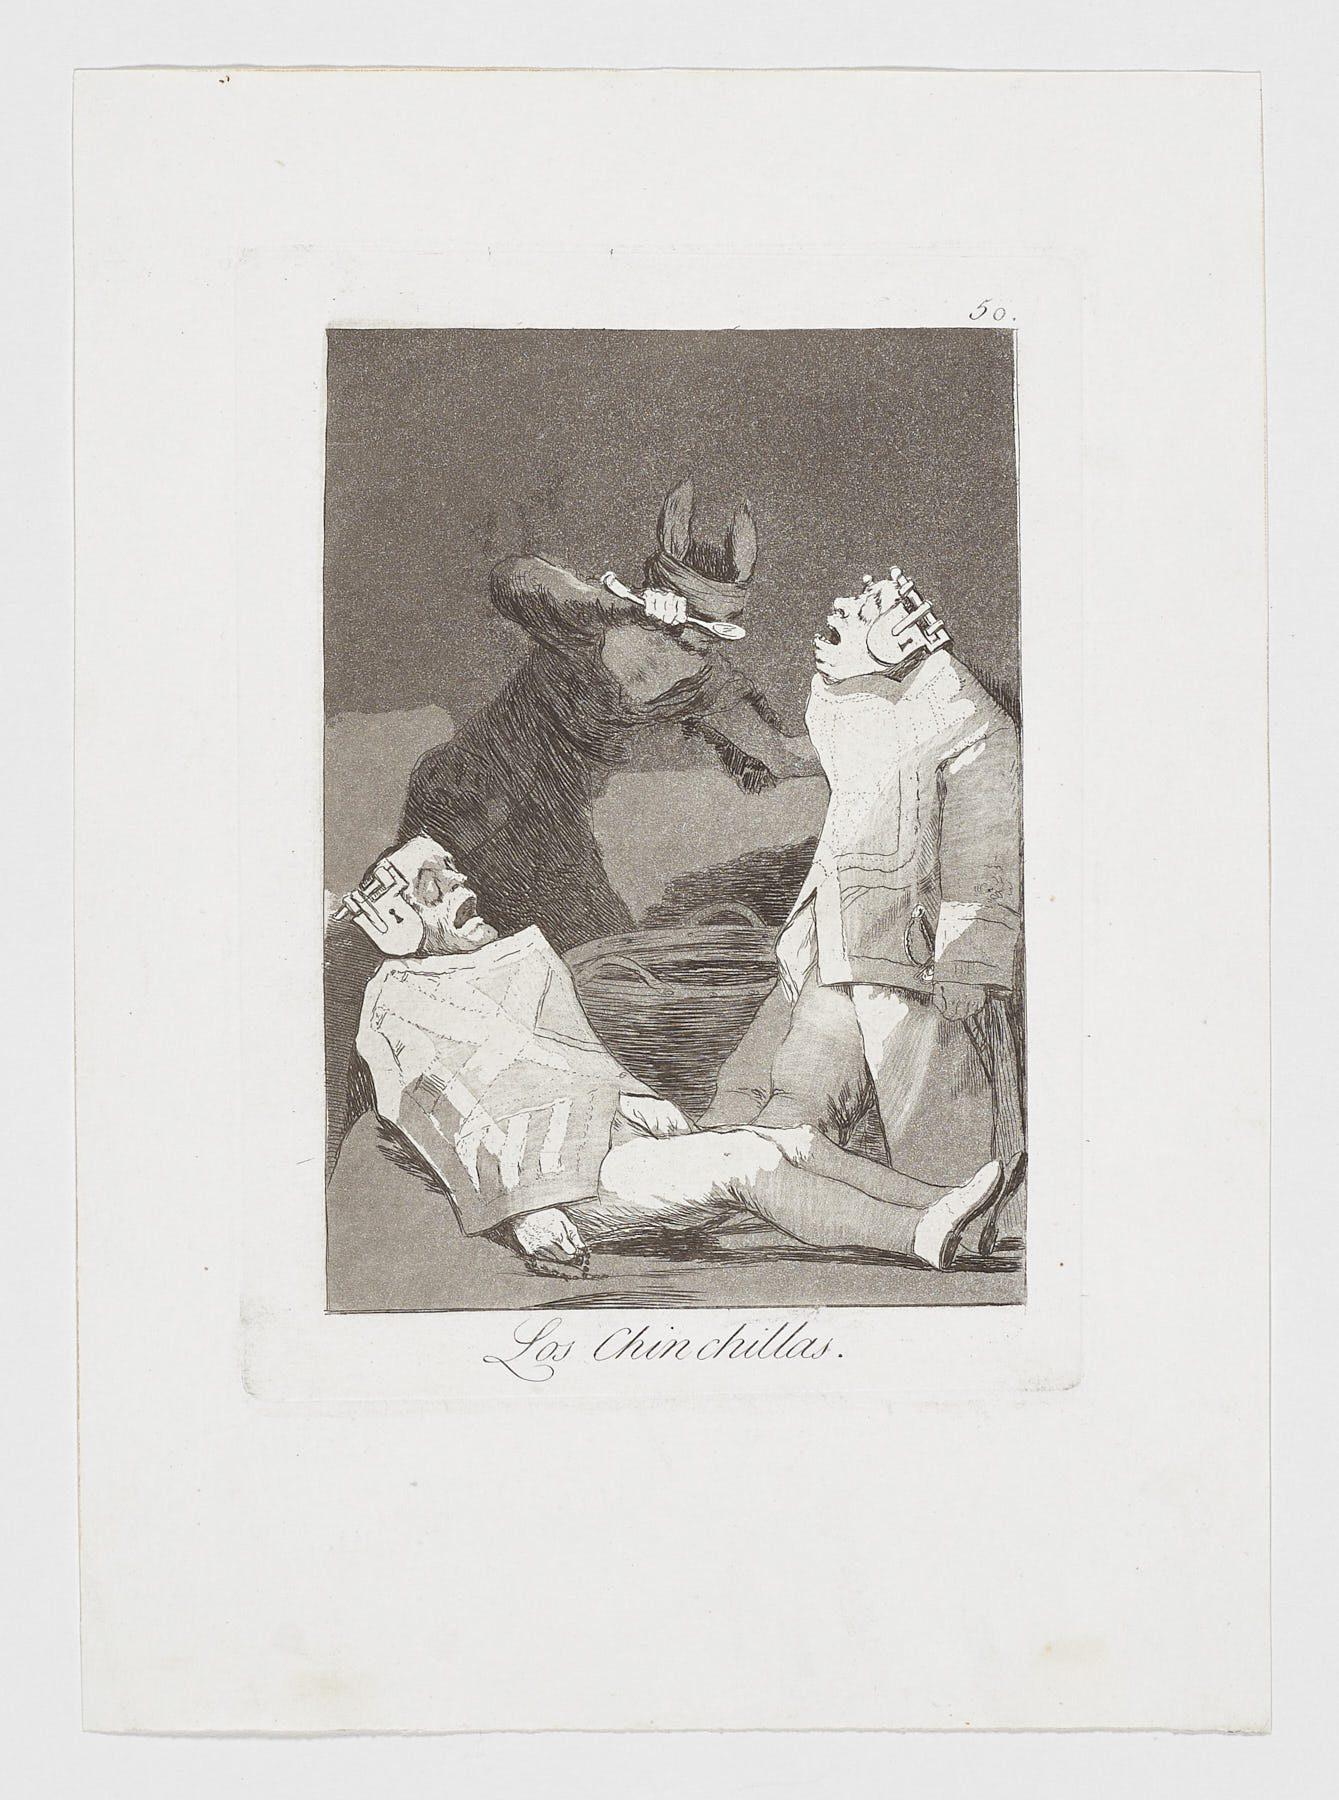 Francisco De Goya Caprichos Los Chinchillas, 2. Auflage, Original-Kunstdruck 